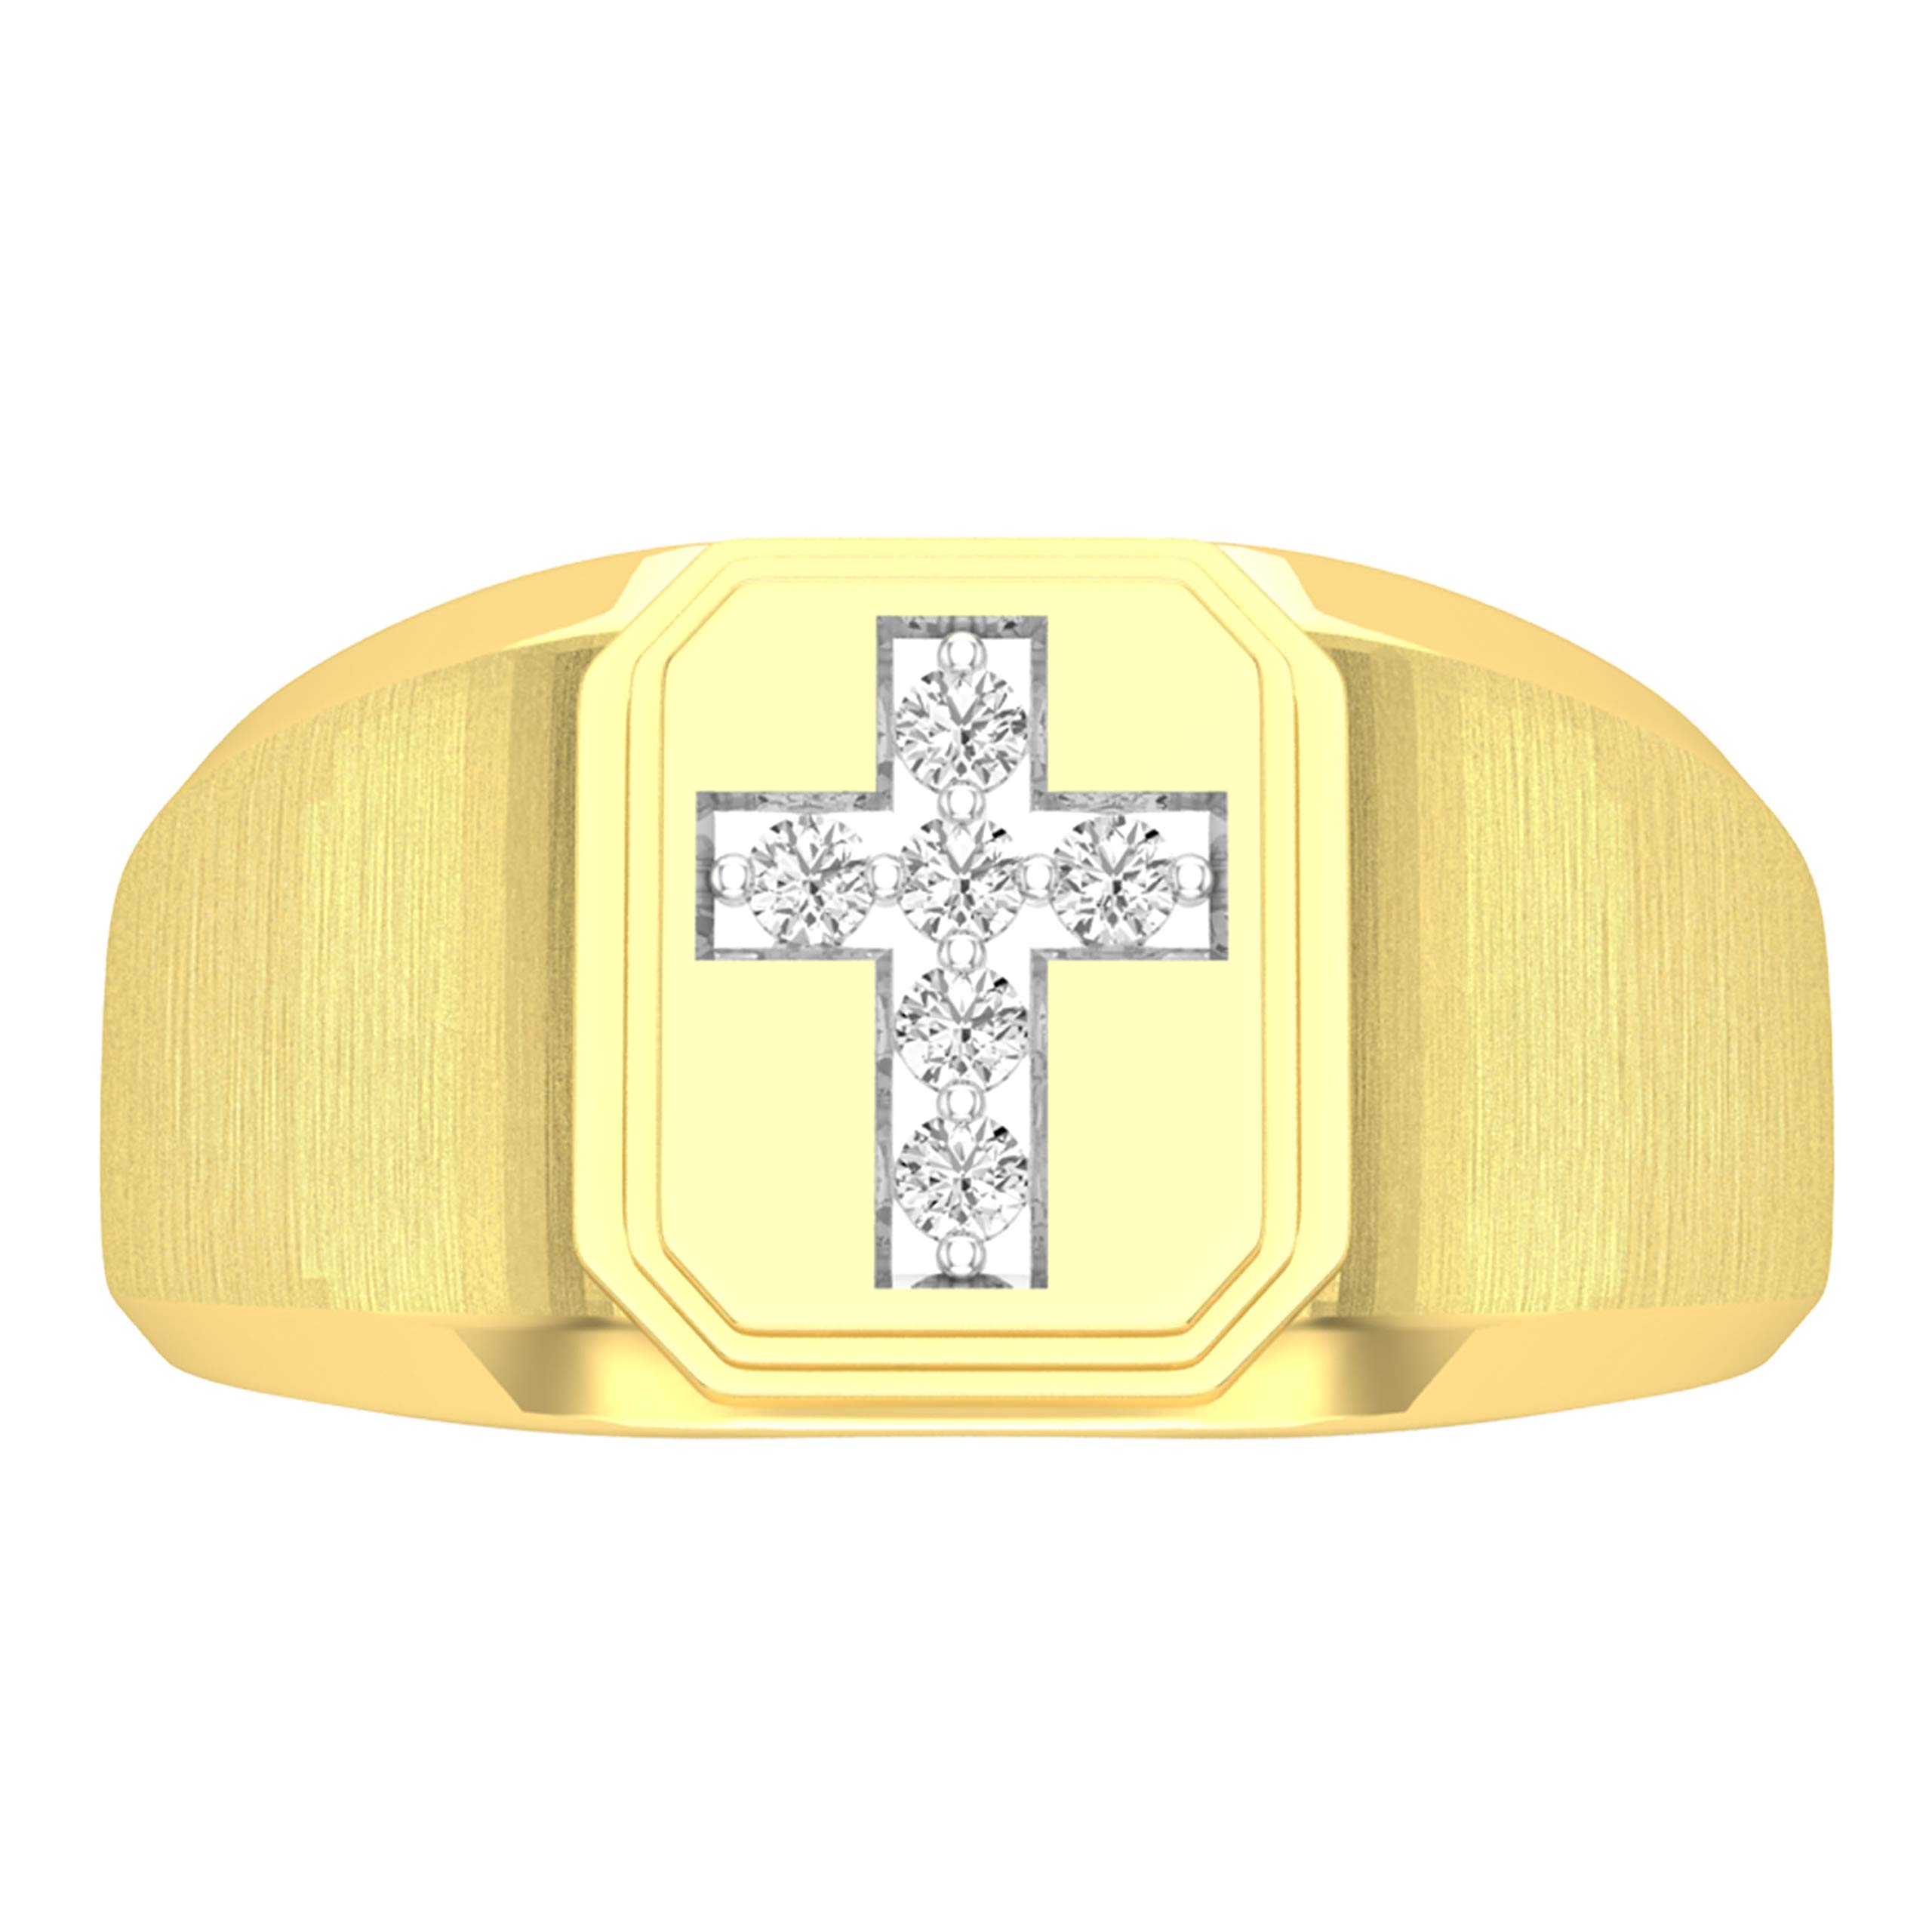 Dazzlingrock Collection 0.10 Carat (ctw) 10k Round Diamond Mens Cross Band Ring, Yellow Gold